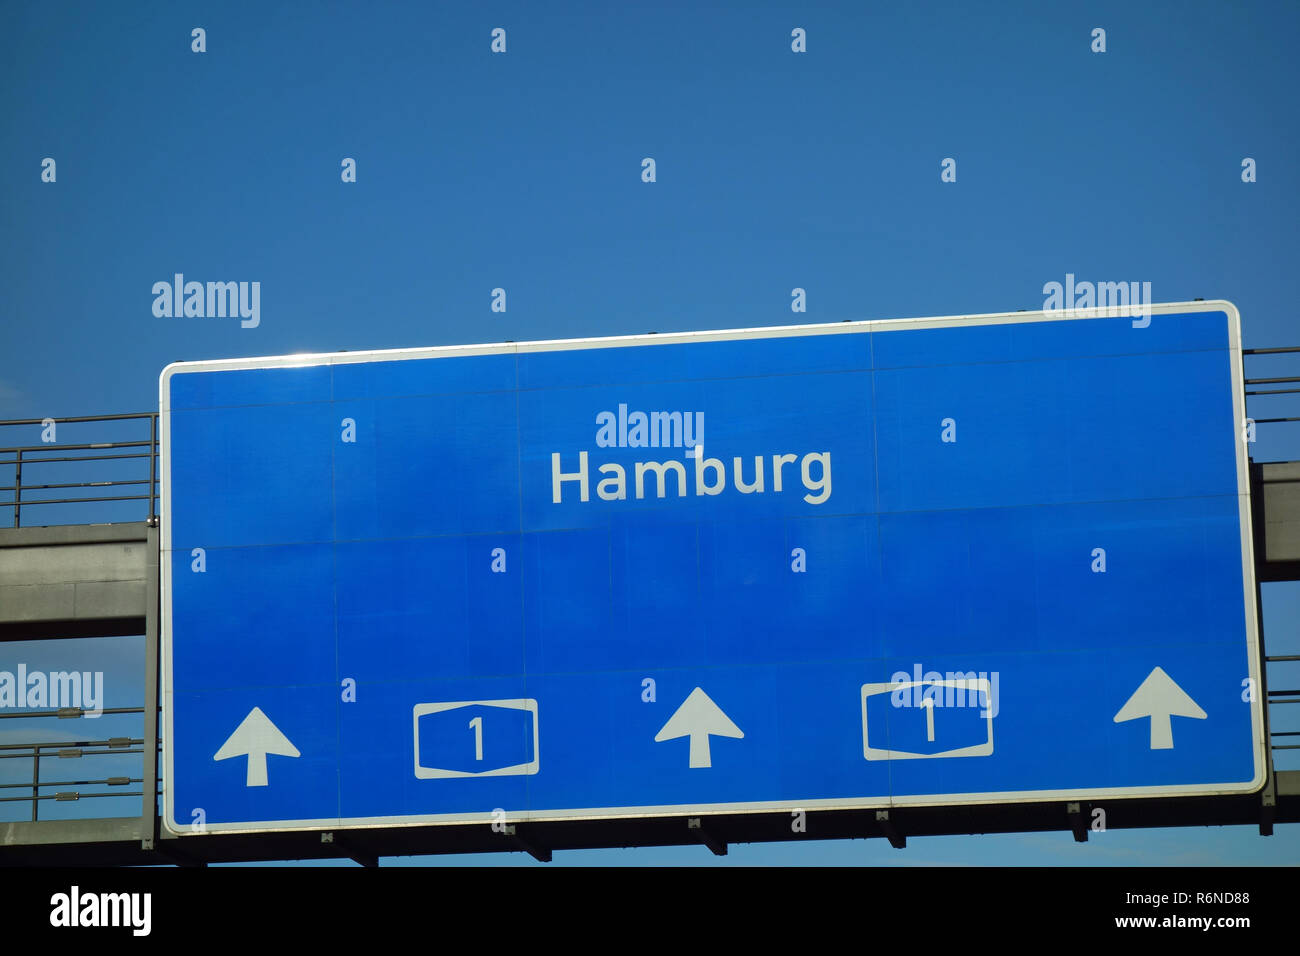 Â highway sign a1 hamburg Stock Photo